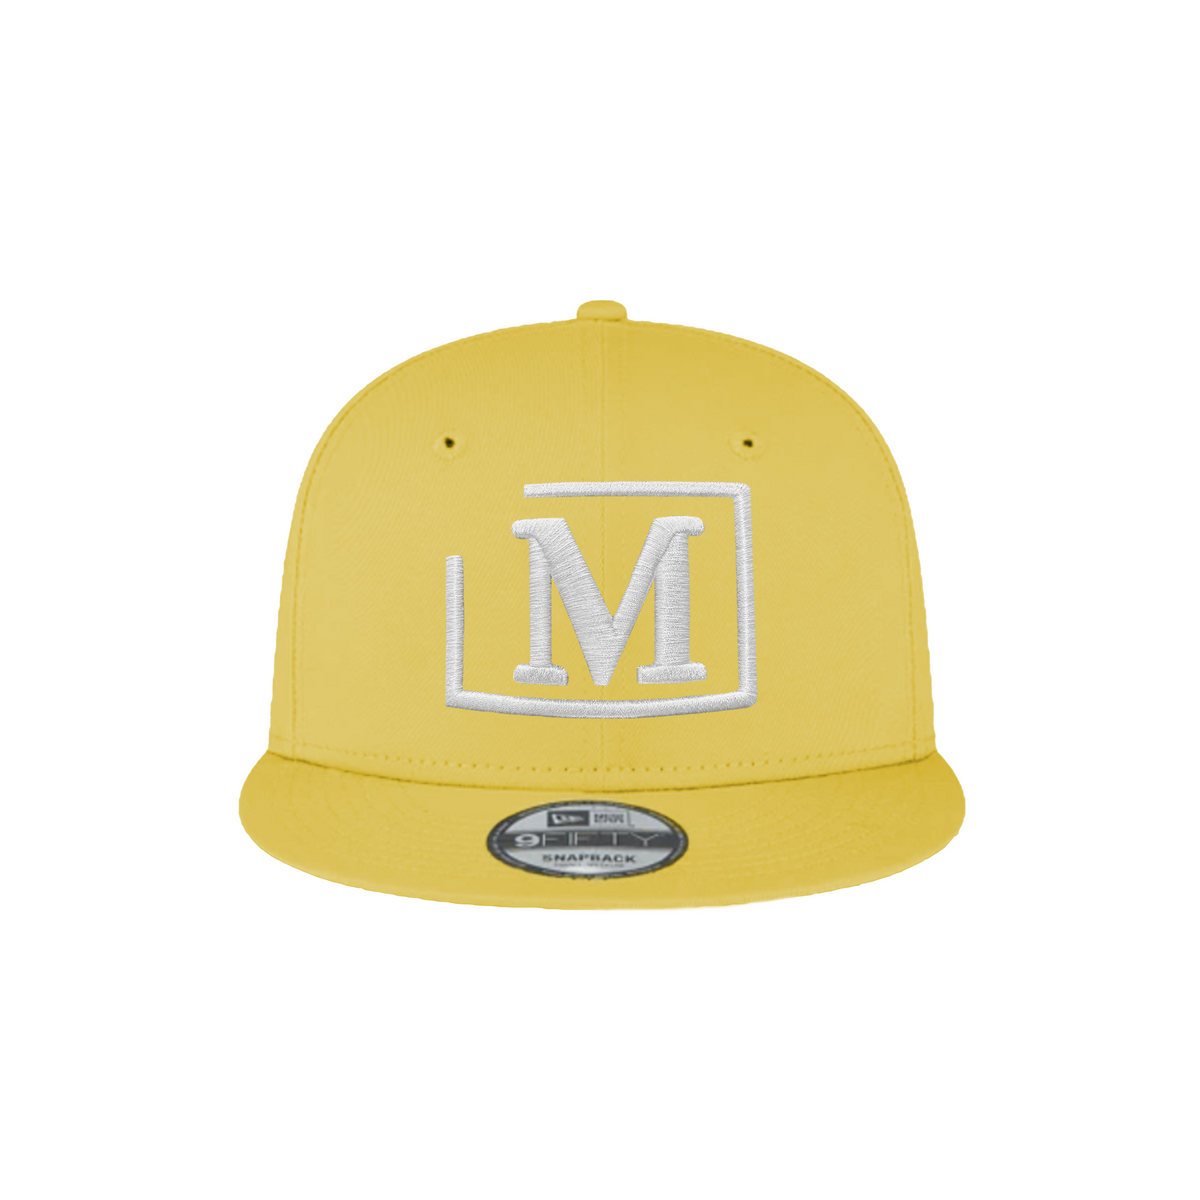 MDB Brand x New Era 9Fifty Snapback Embroidered Baseball Cap - Bright Color